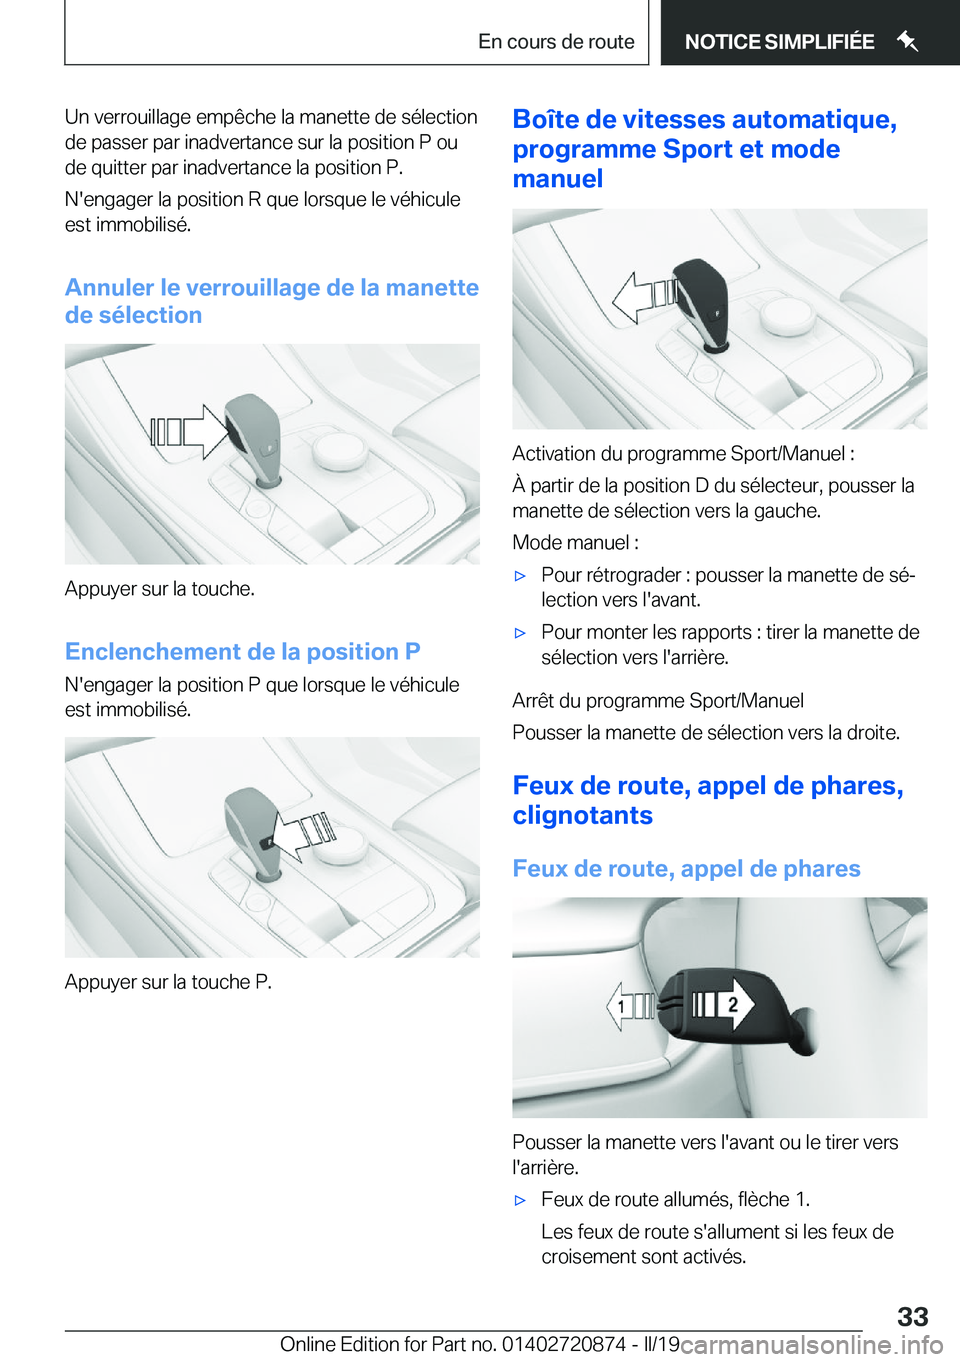 BMW X7 2019  Notices Demploi (in French) �U�n��v�e�r�r�o�u�i�l�l�a�g�e��e�m�p�ê�c�h�e��l�a��m�a�n�e�t�t�e��d�e��s�é�l�e�c�t�i�o�n�d�e��p�a�s�s�e�r��p�a�r��i�n�a�d�v�e�r�t�a�n�c�e��s�u�r��l�a��p�o�s�i�t�i�o�n��P��o�u�d�e��q�u